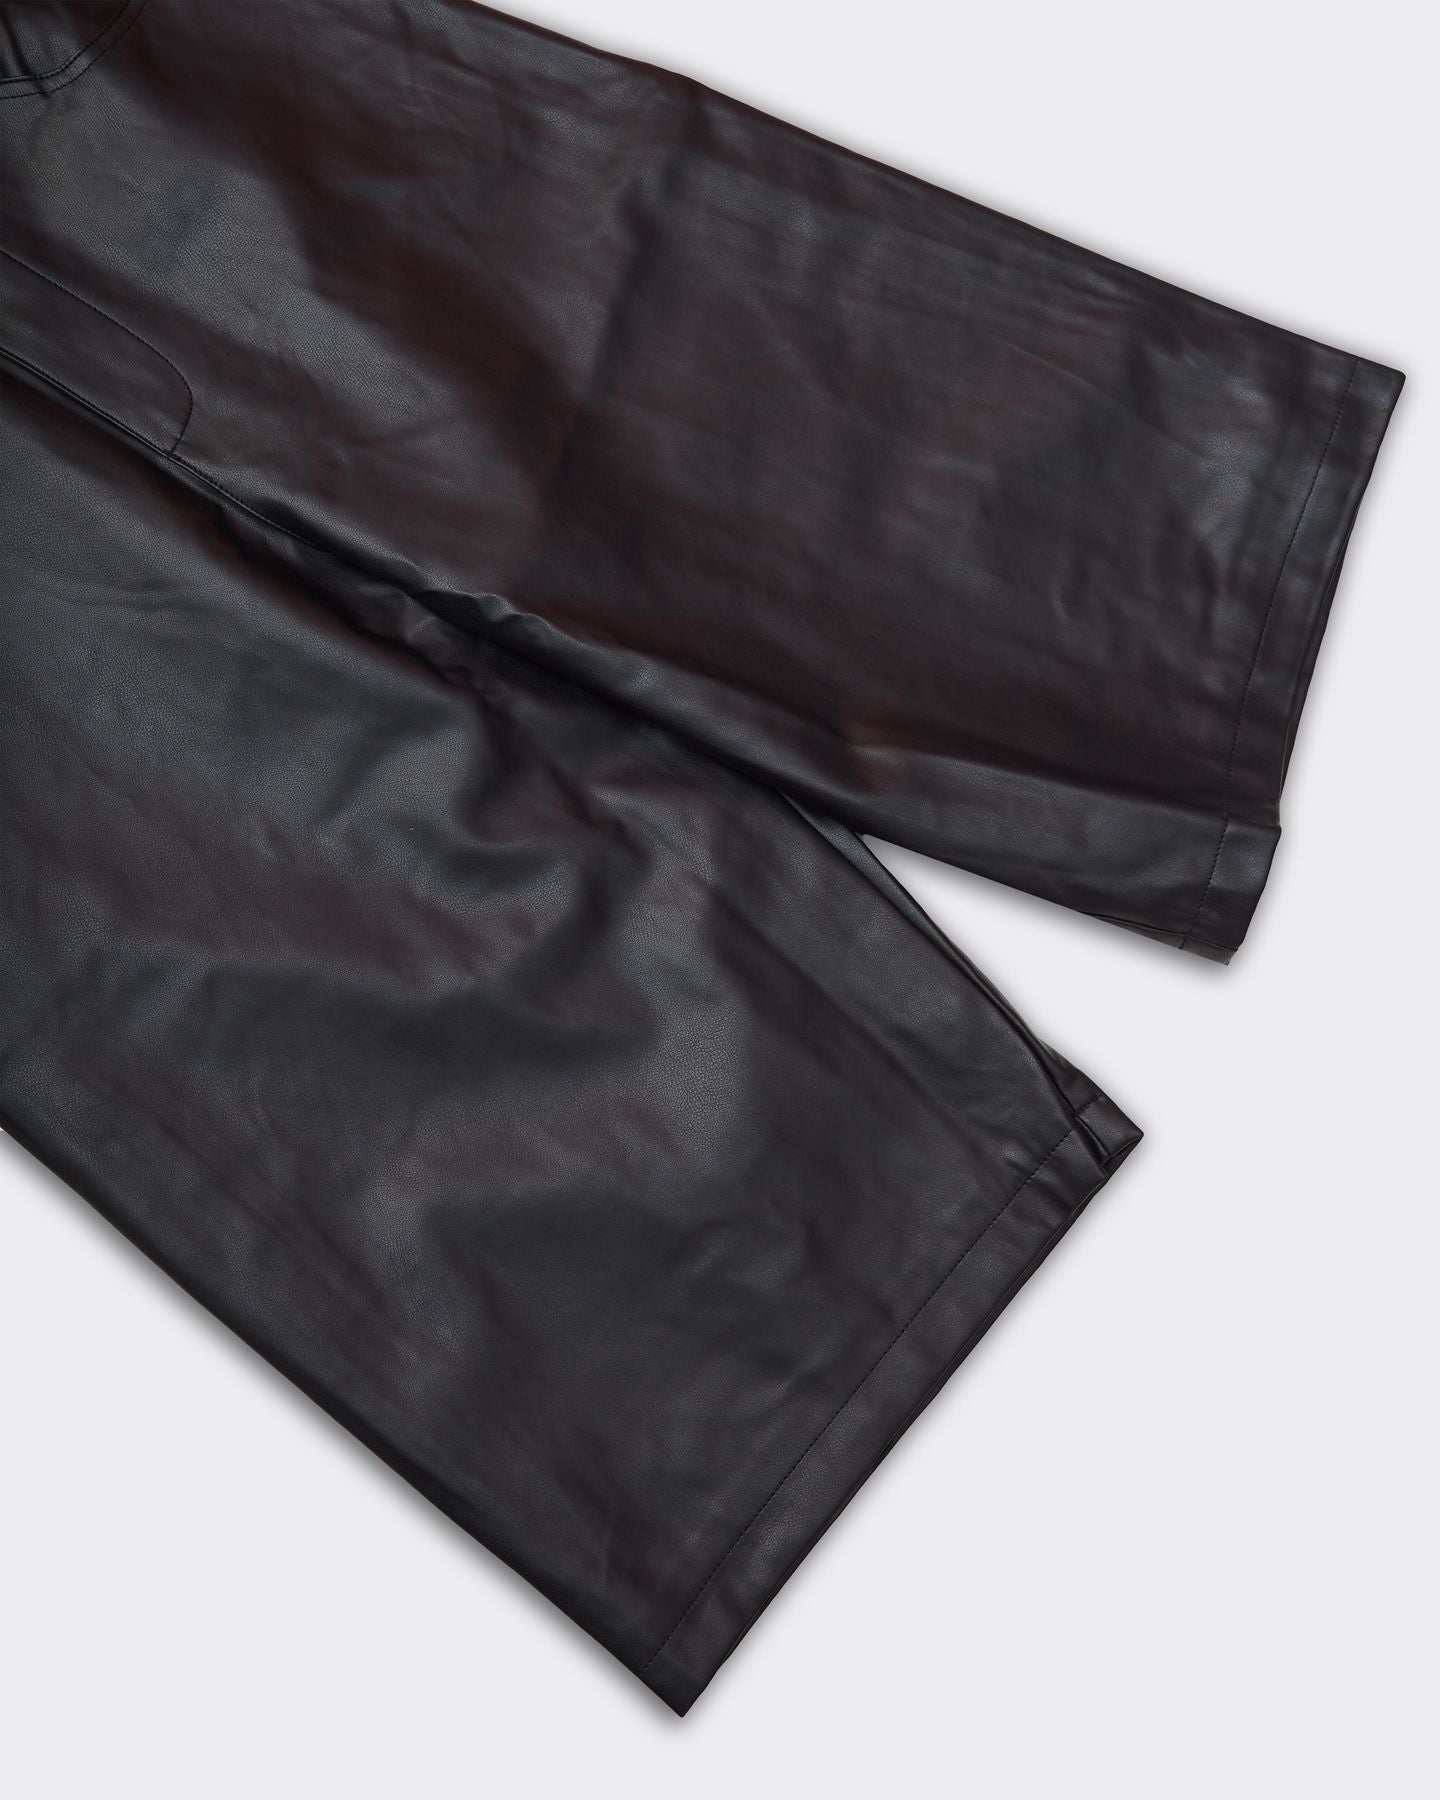 Breacher Black Leather Shorts